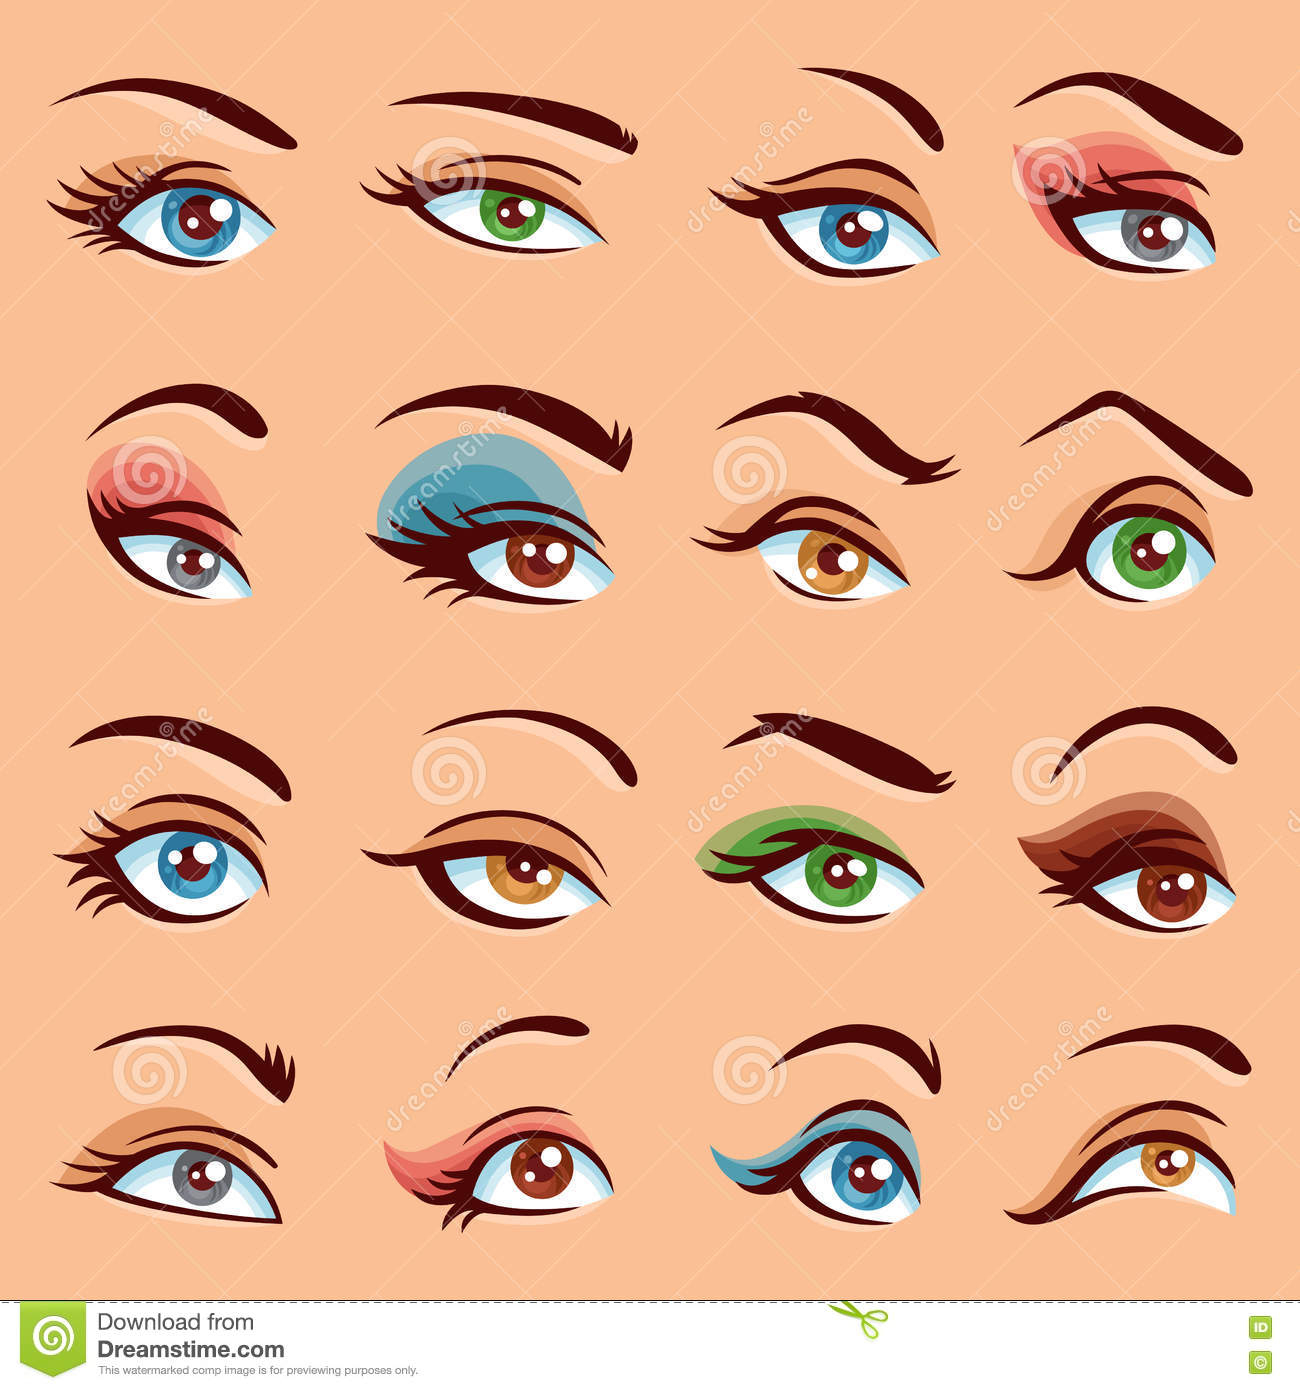 Design Of Eyes Makeup Eye Makeup Icons Set Stock Vector Illustration Of Look 73139959